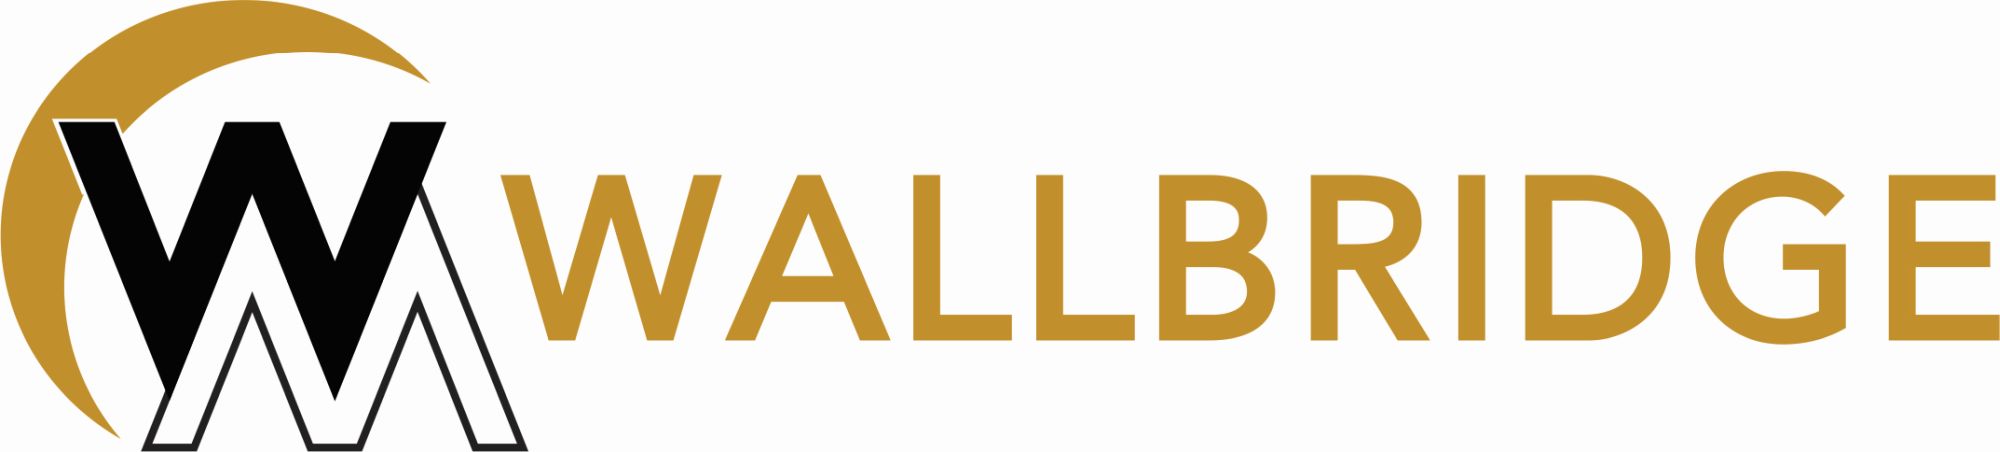 Wallbridge Logo Final_reduced.jpg